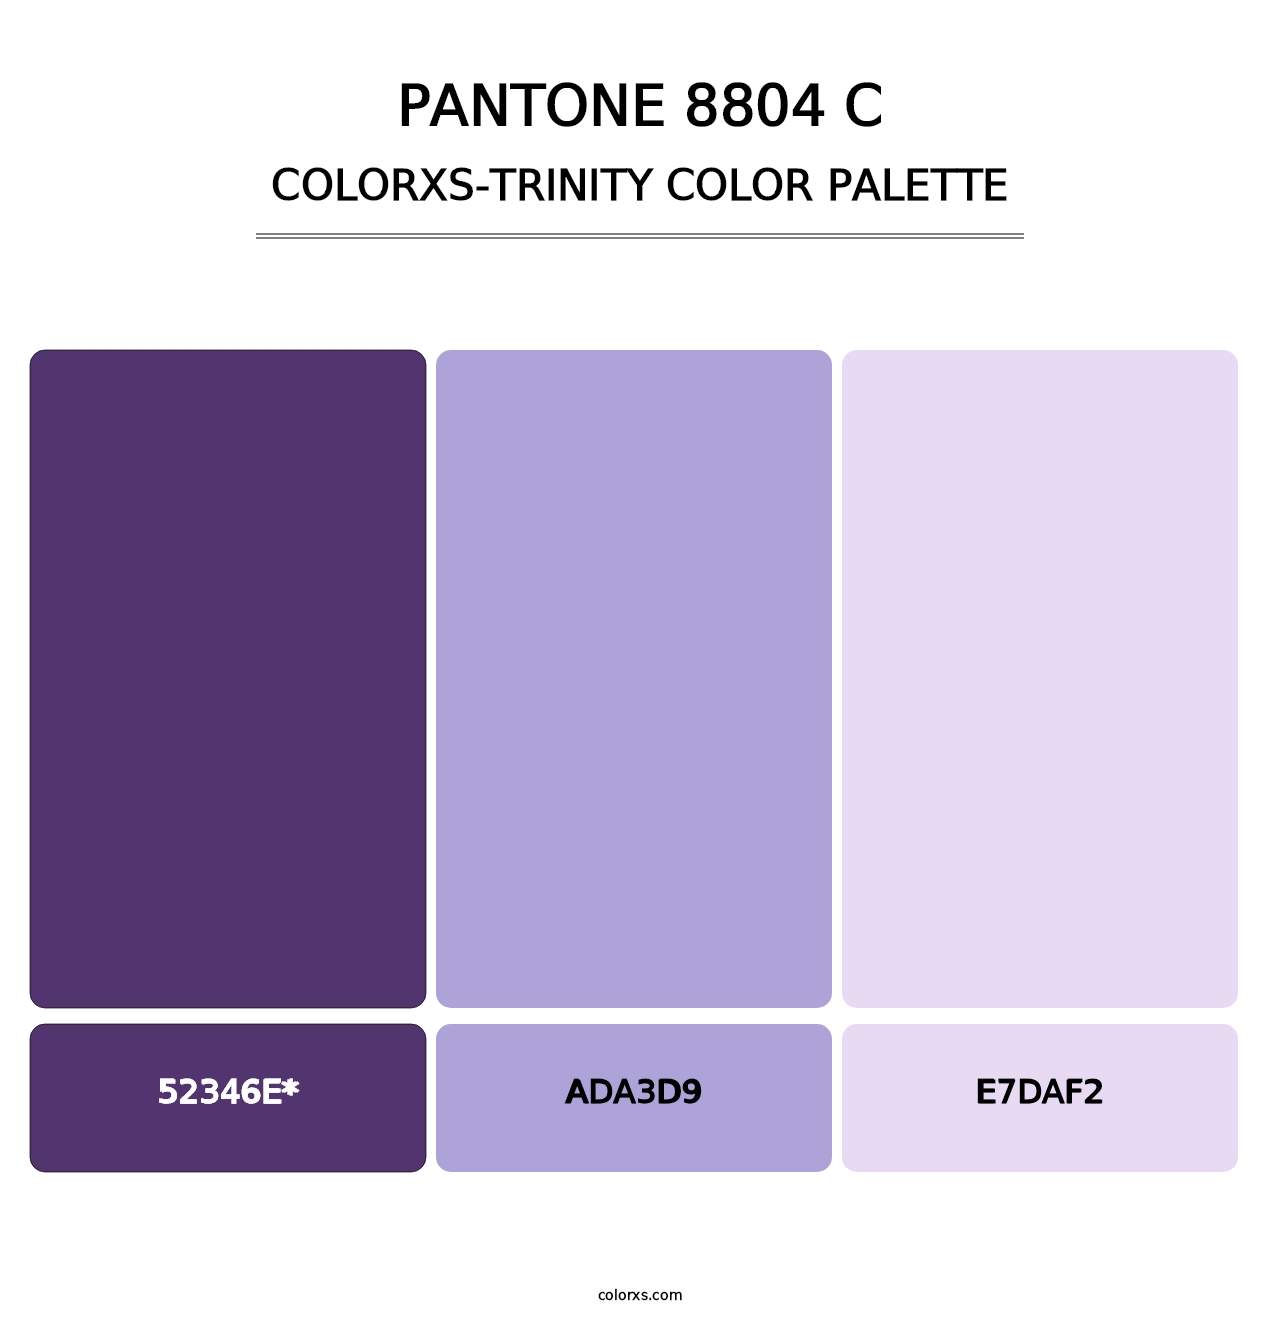 PANTONE 8804 C - Colorxs Trinity Palette